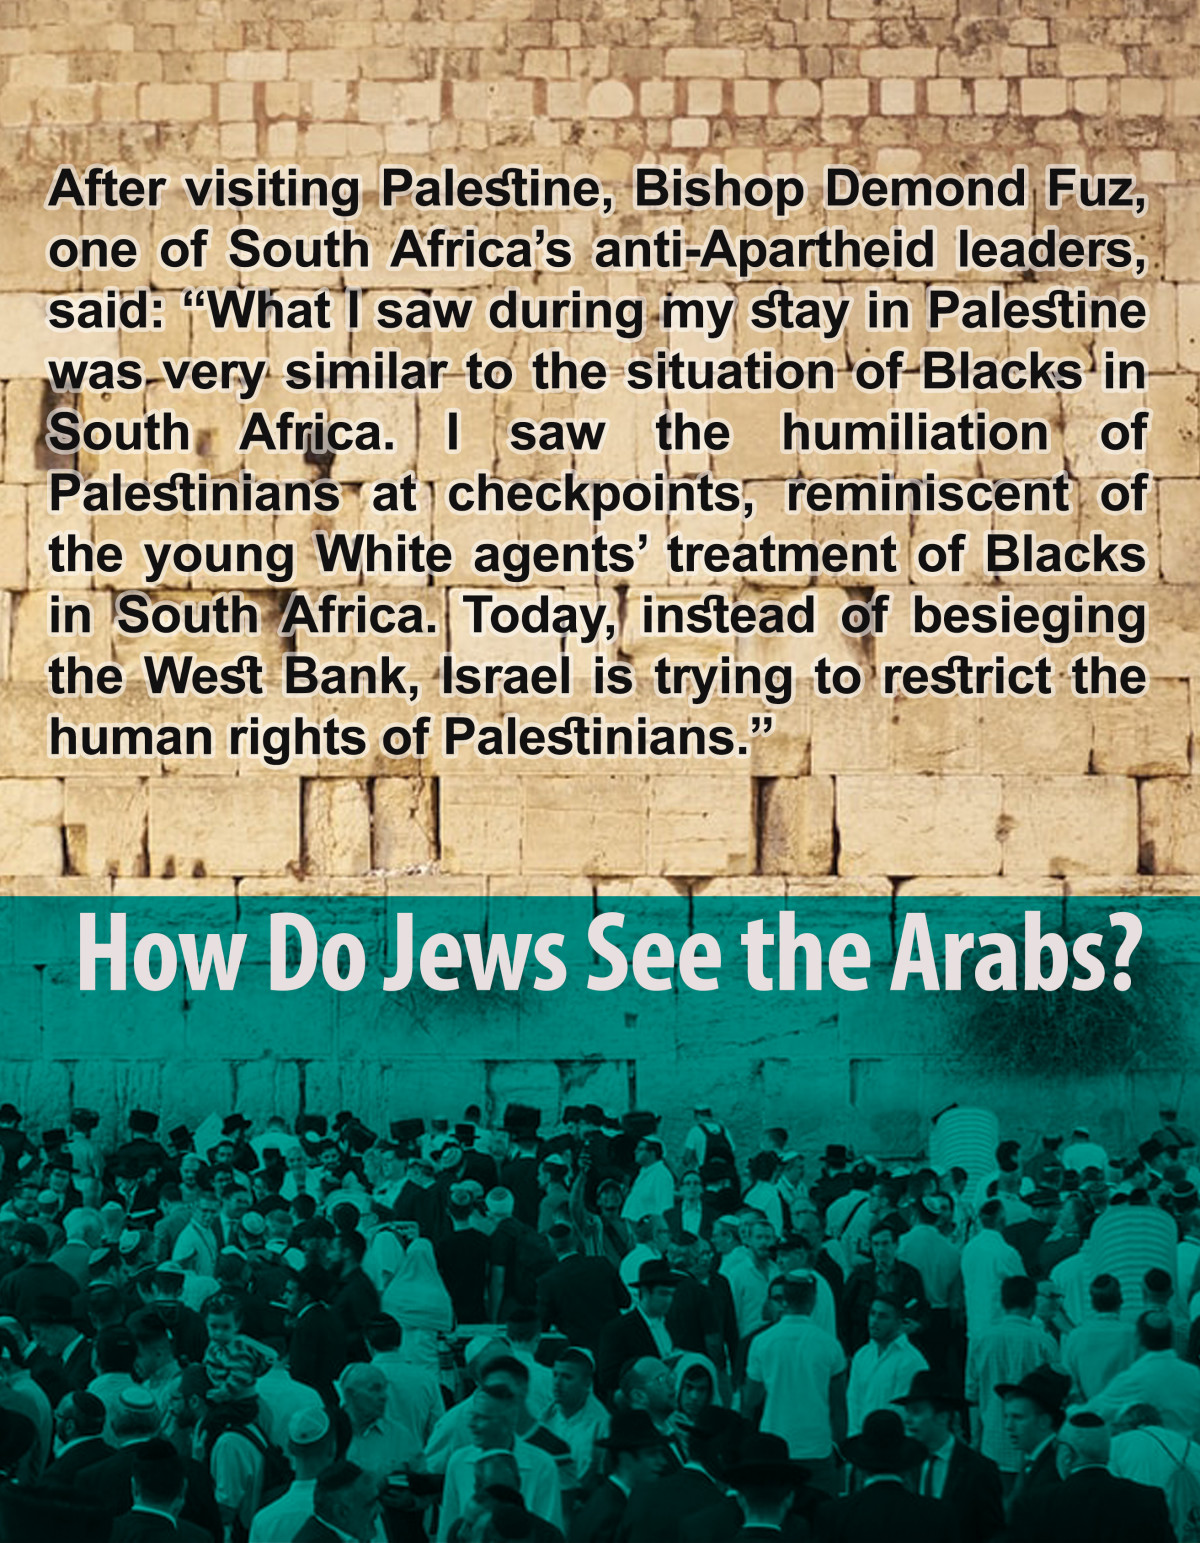 Jews and Arabs